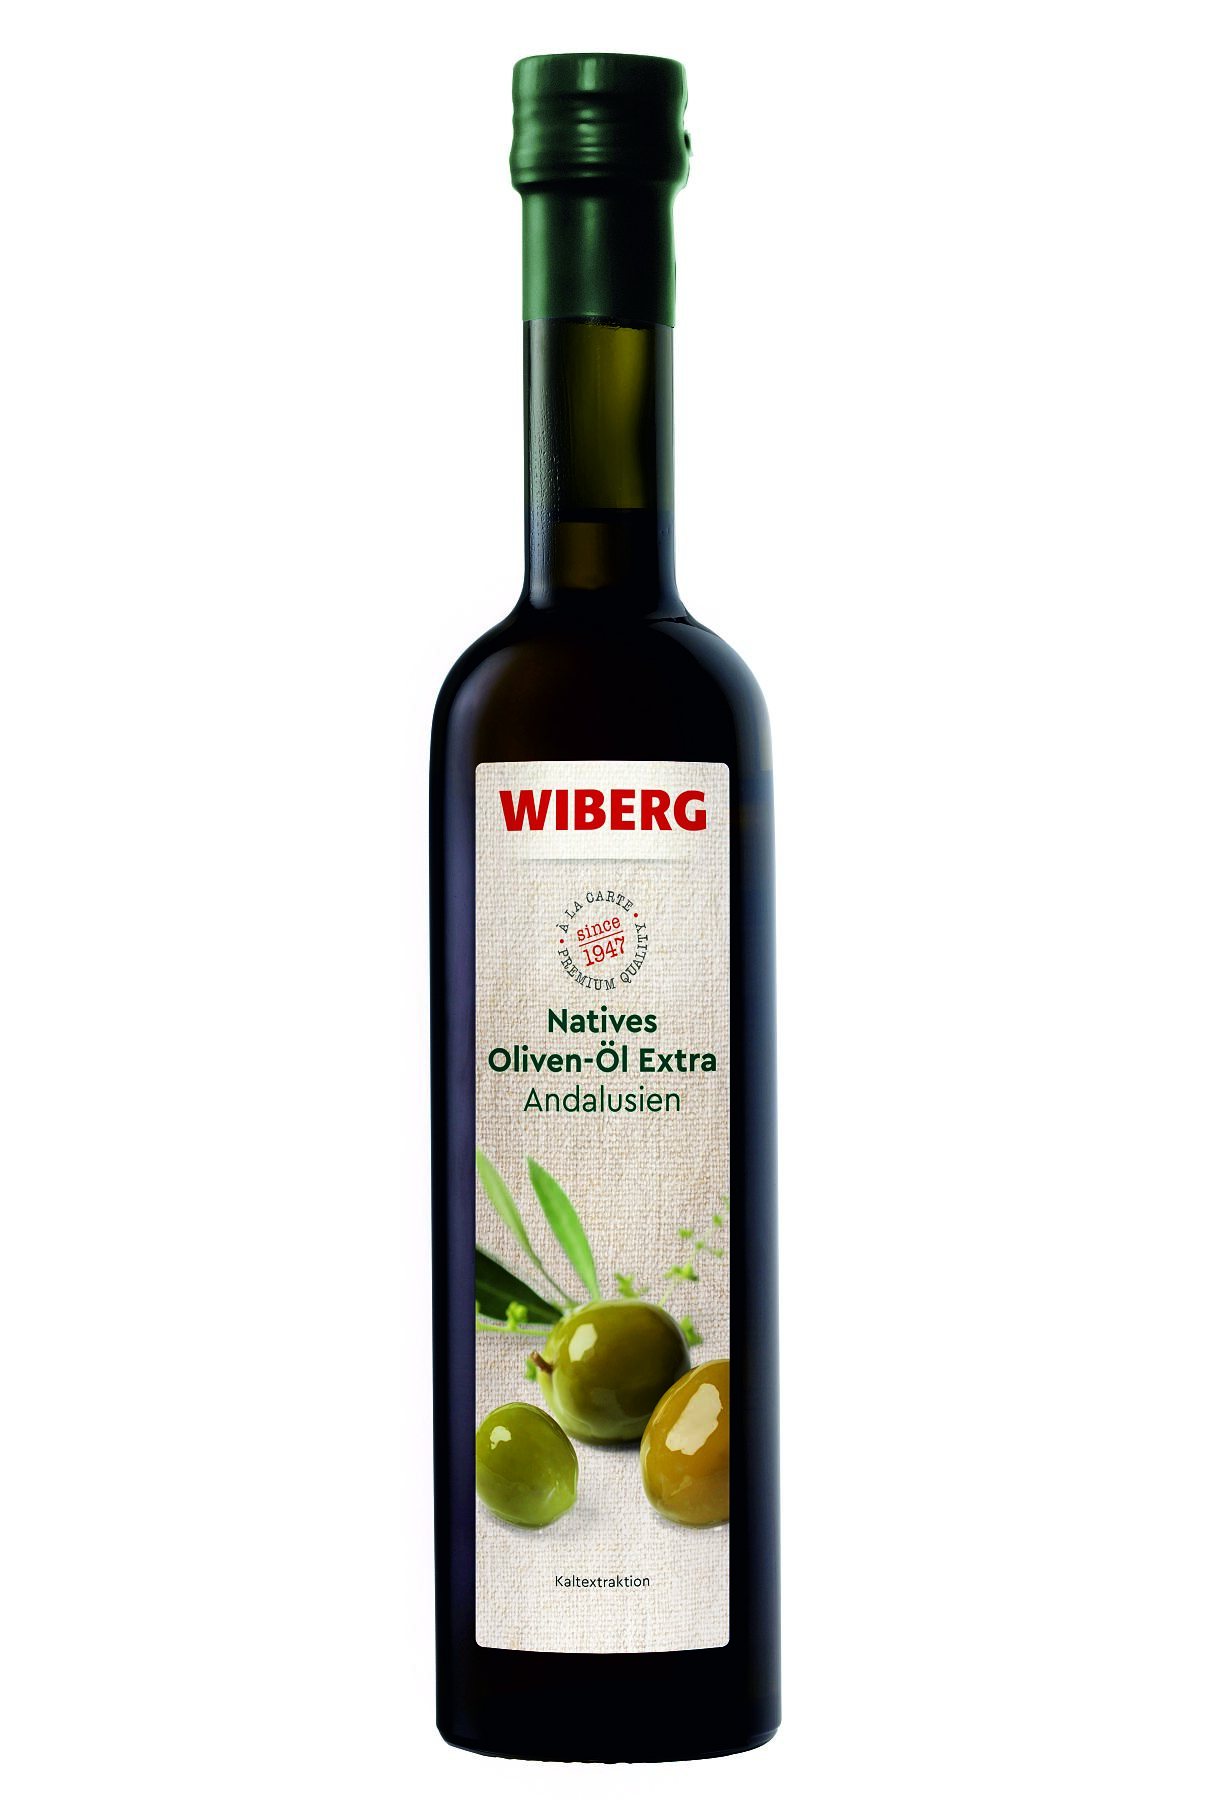 WIBERG Natives Oliven-Öl Extra Andalusien